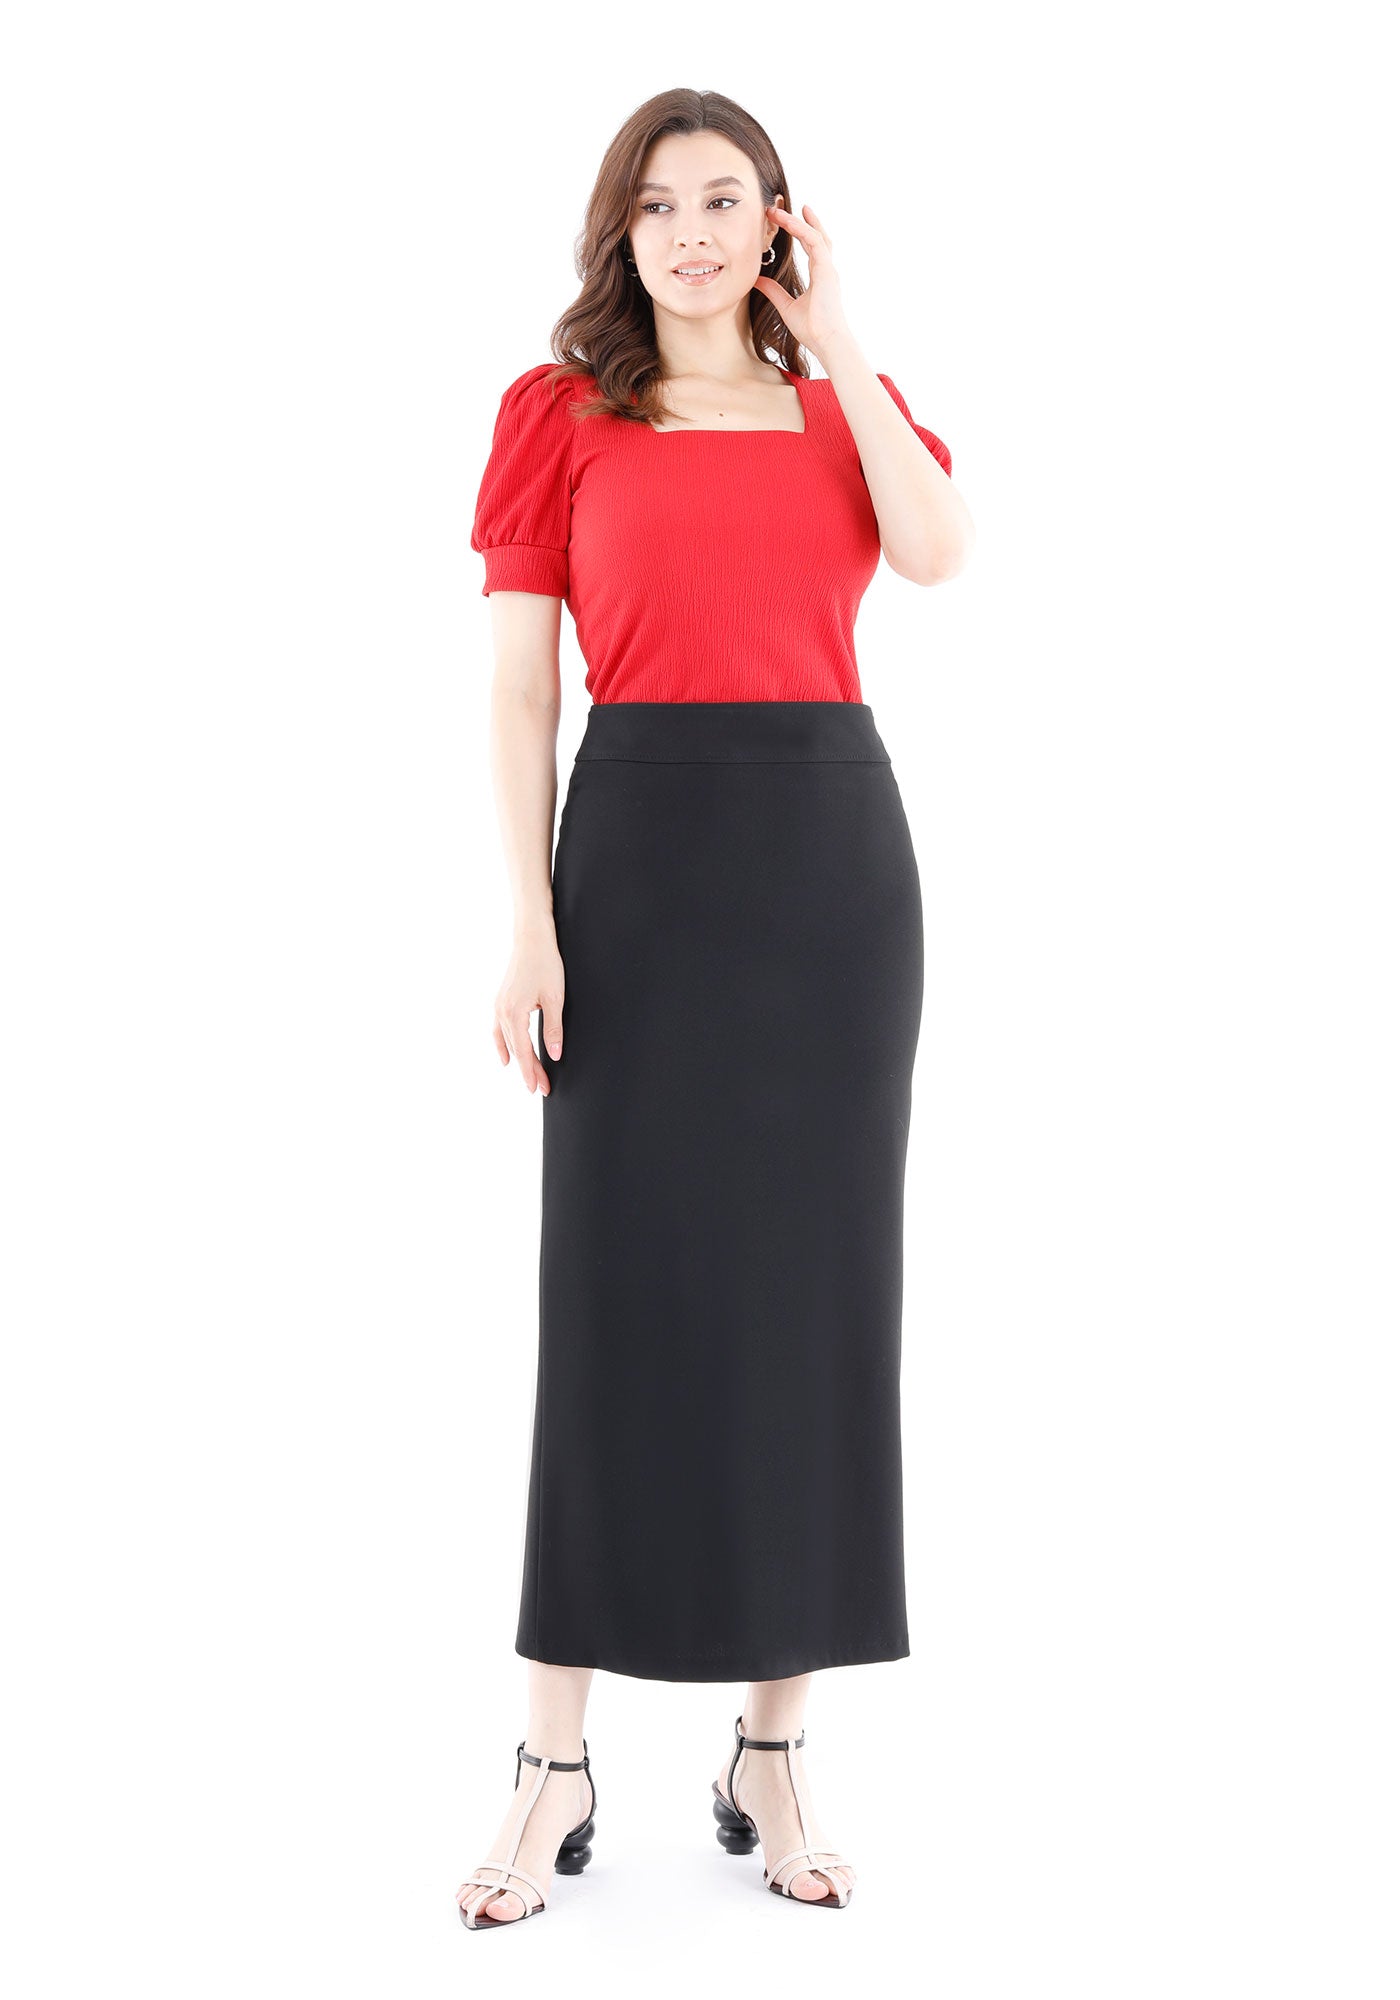 Women's Black Maxi Pencil Skirt with Back Slit G-Line